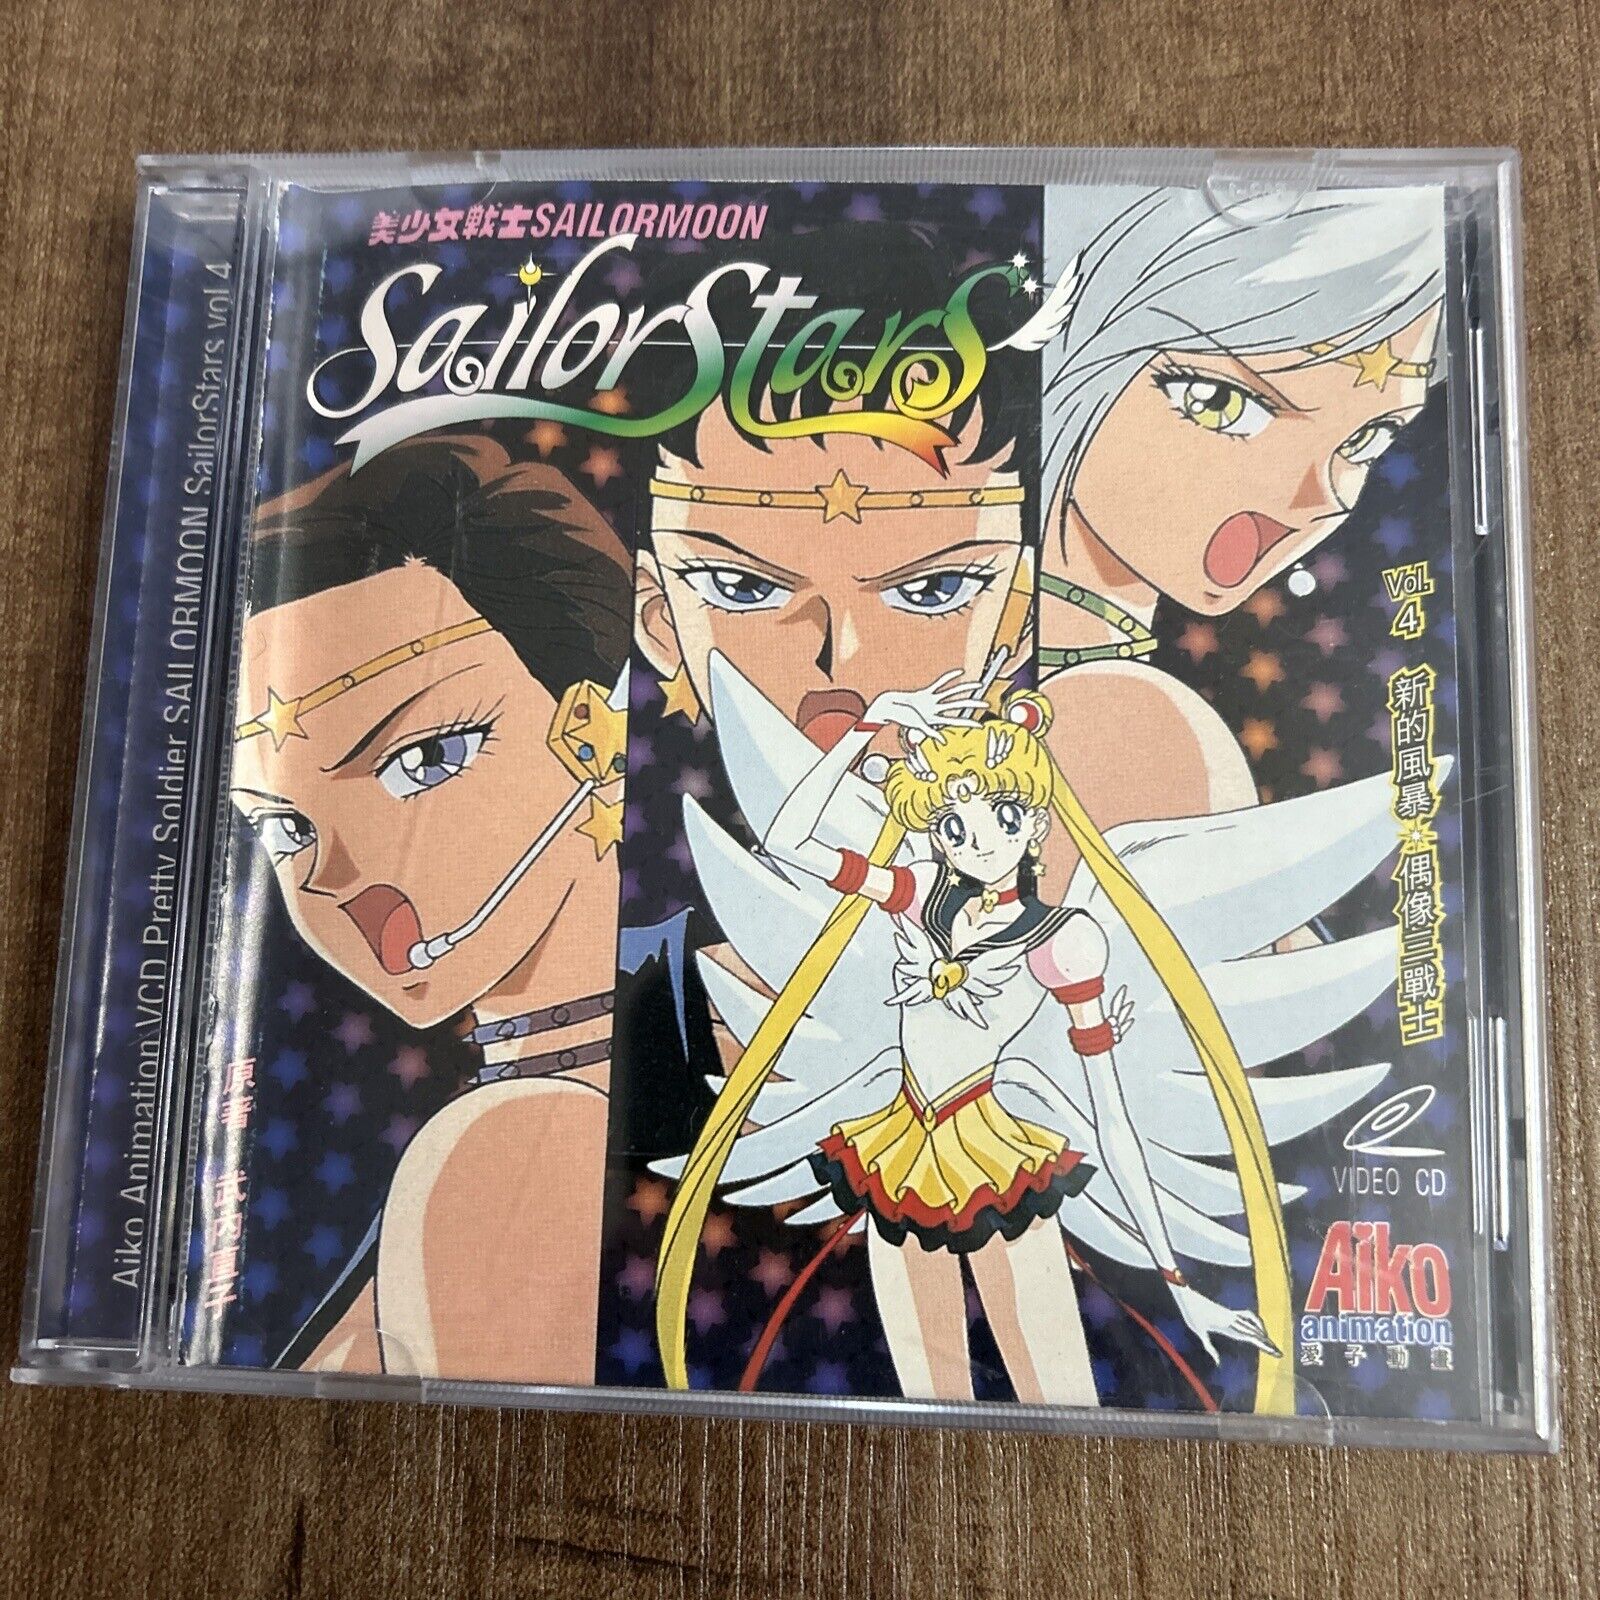 Sailor Moon Sailor Stars Video CD Vol. 4 AIKO Animation Pretty Soldier 1992